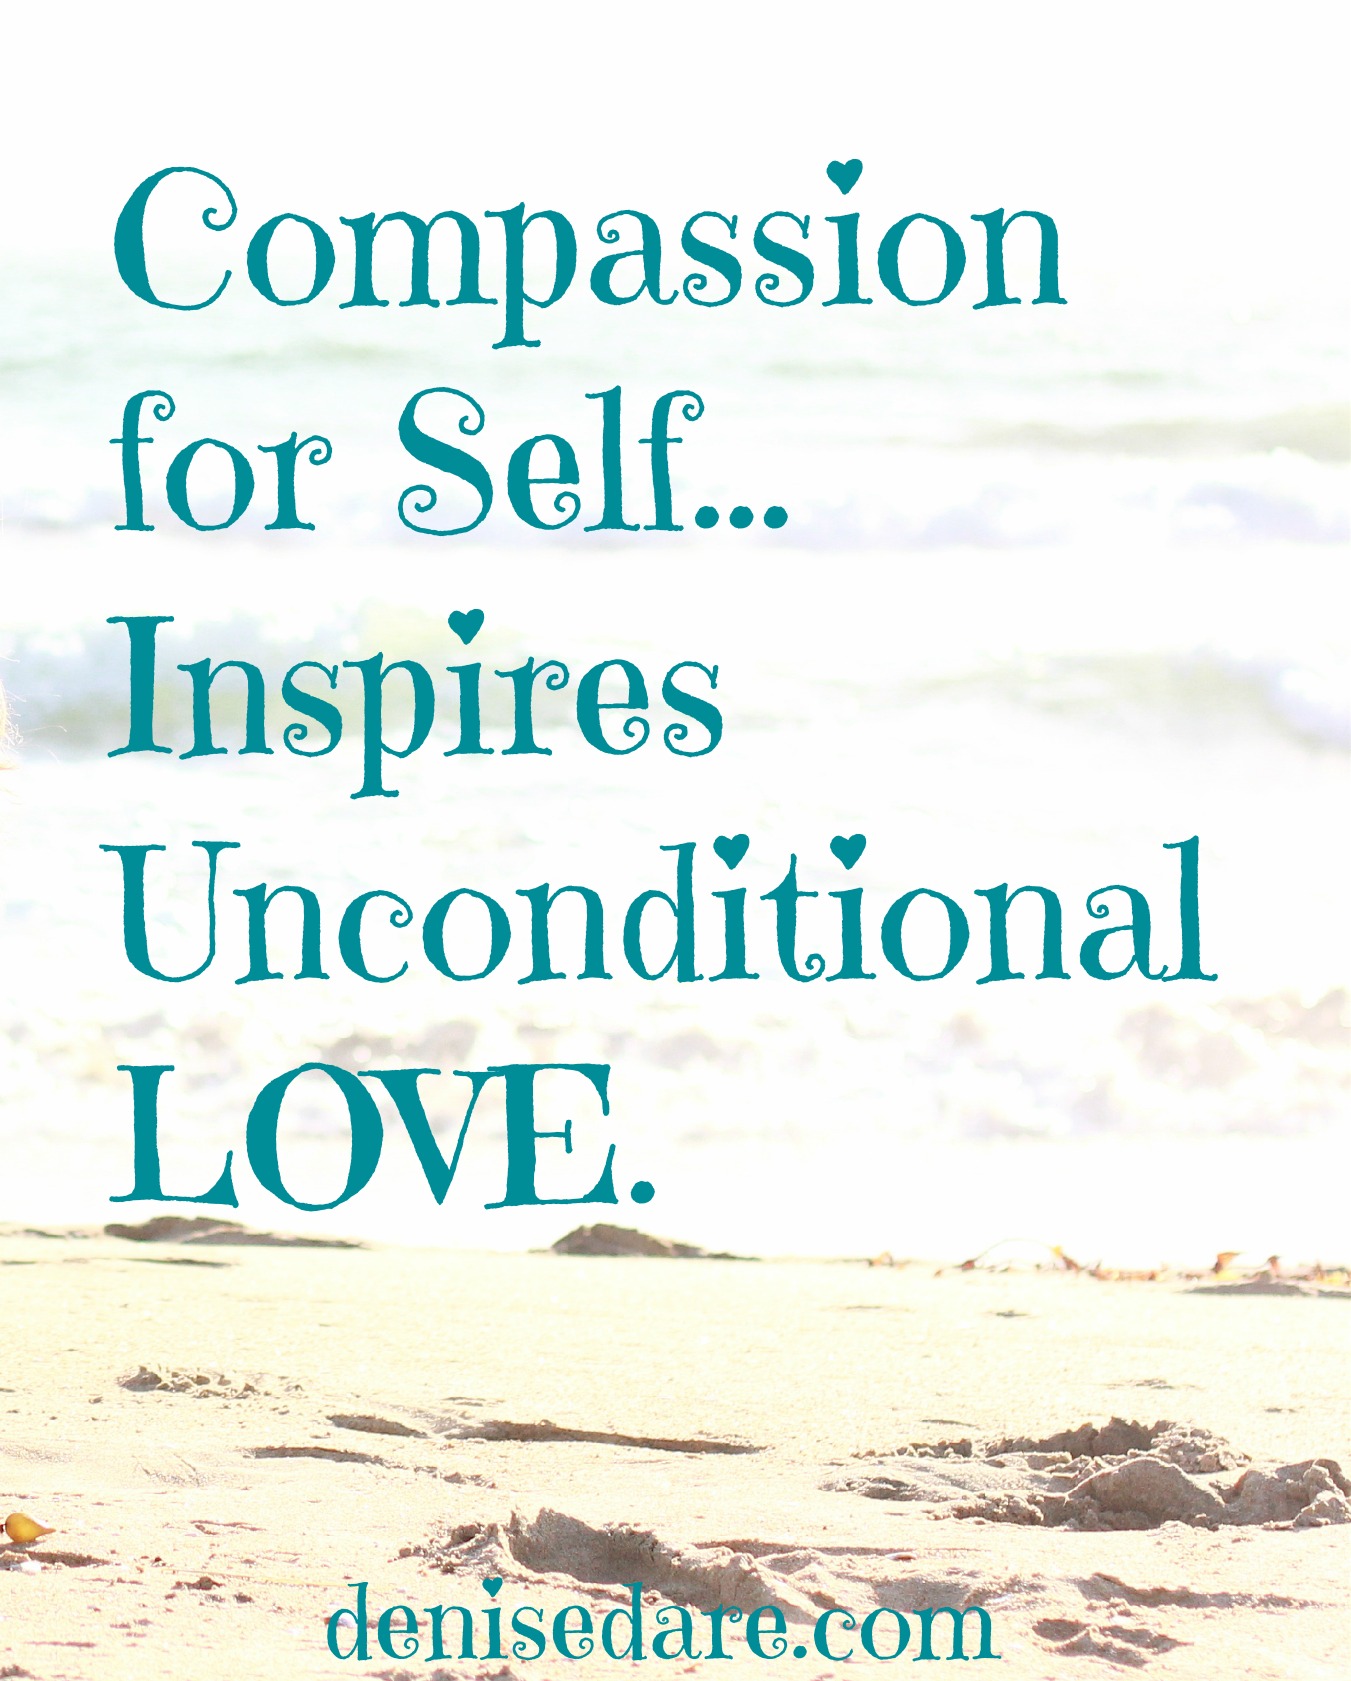 Compassion for Self